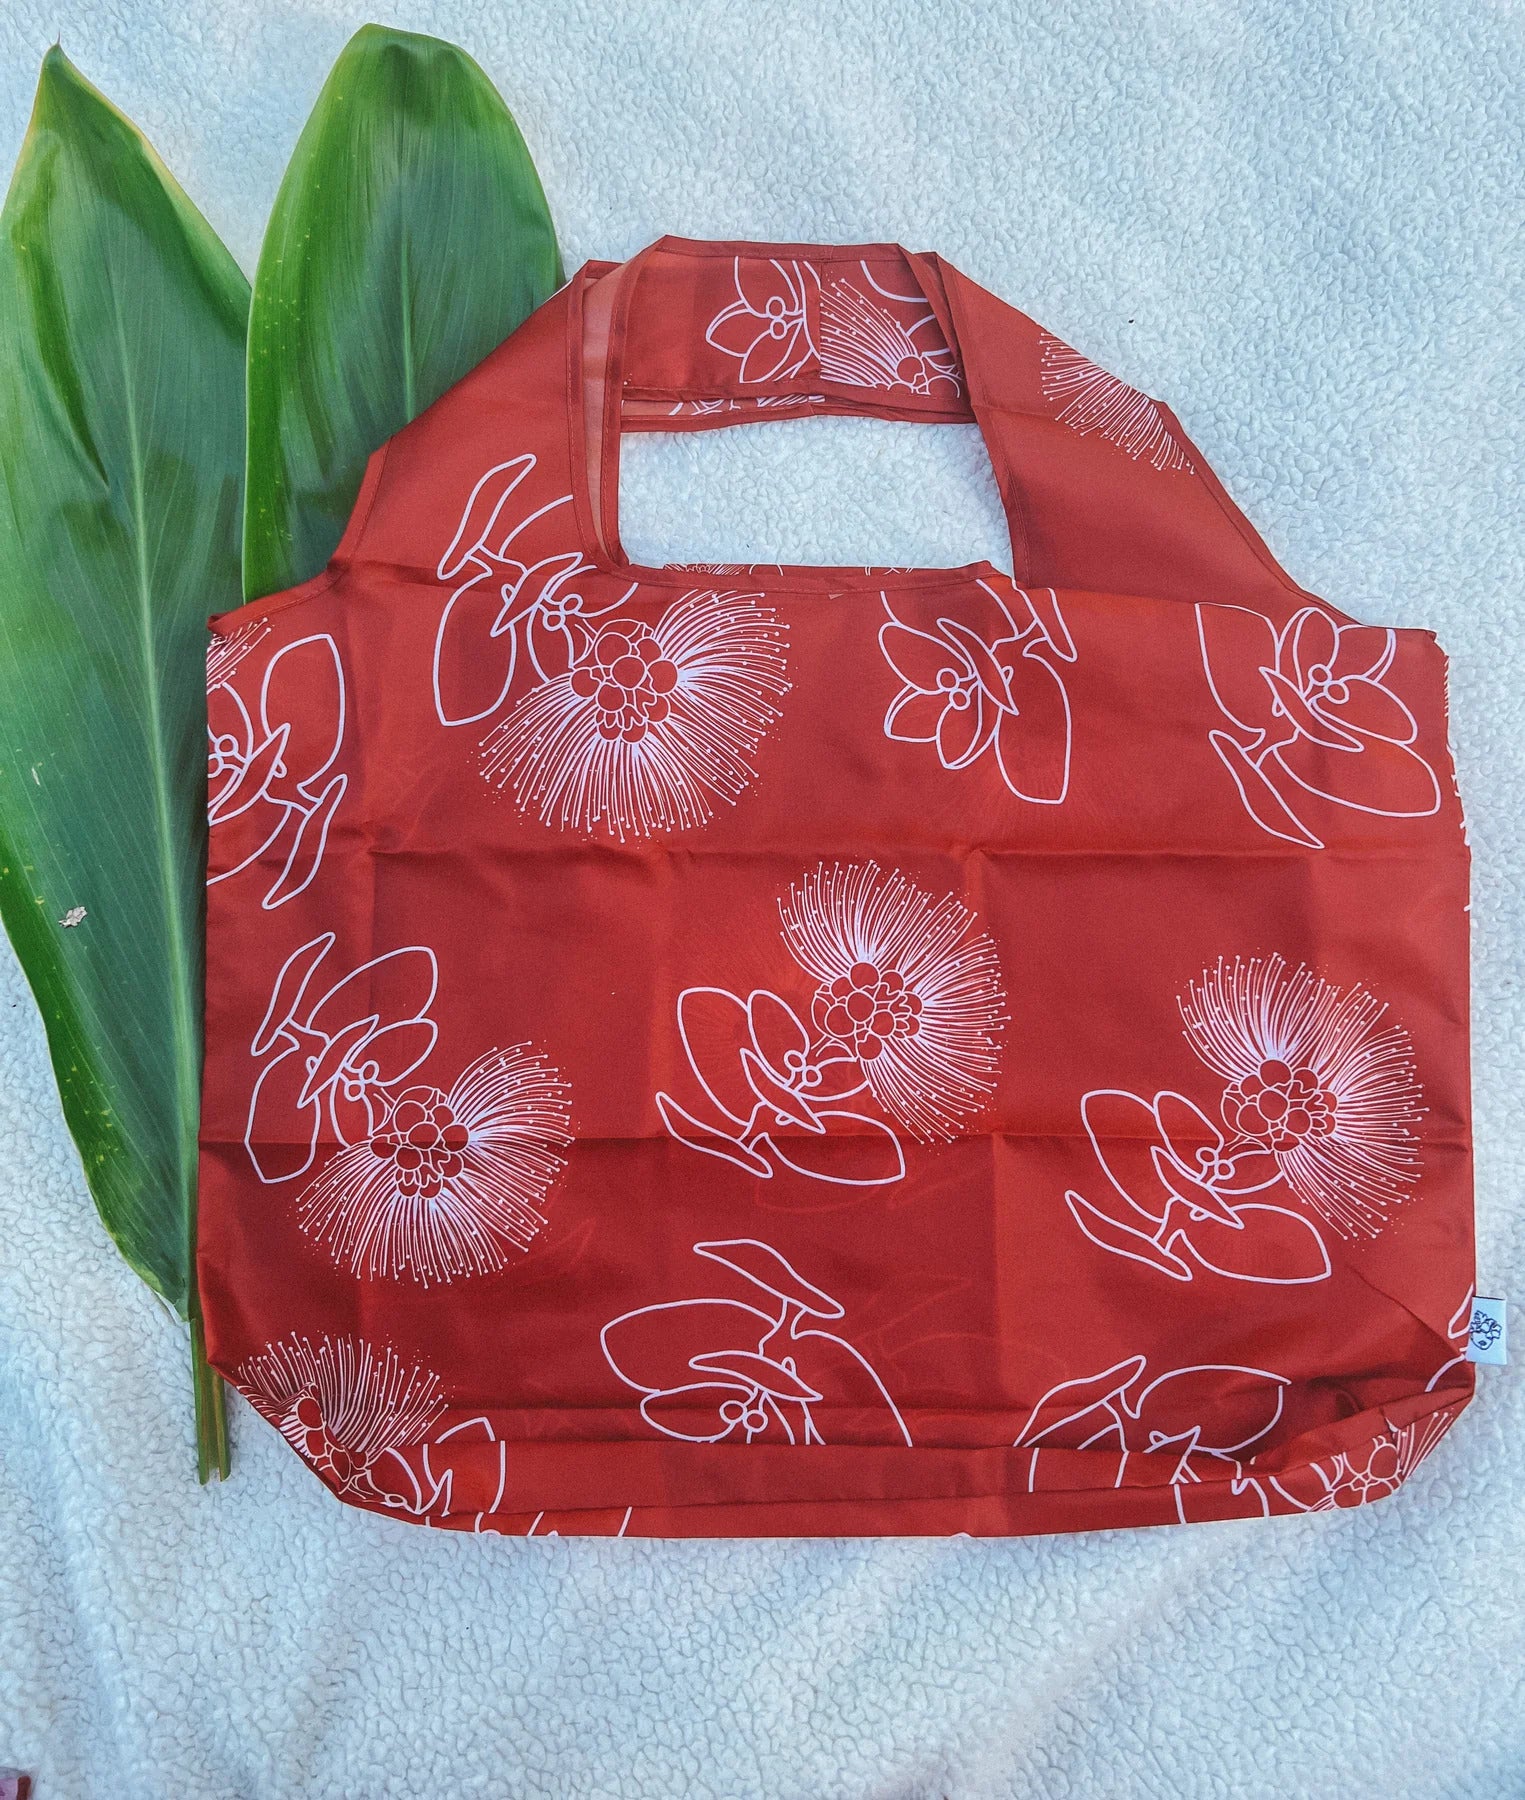 Pop-Up Mākeke - Lei'ohu Designs - Reusable Grocery Bag - 'Ohi'a Lehua